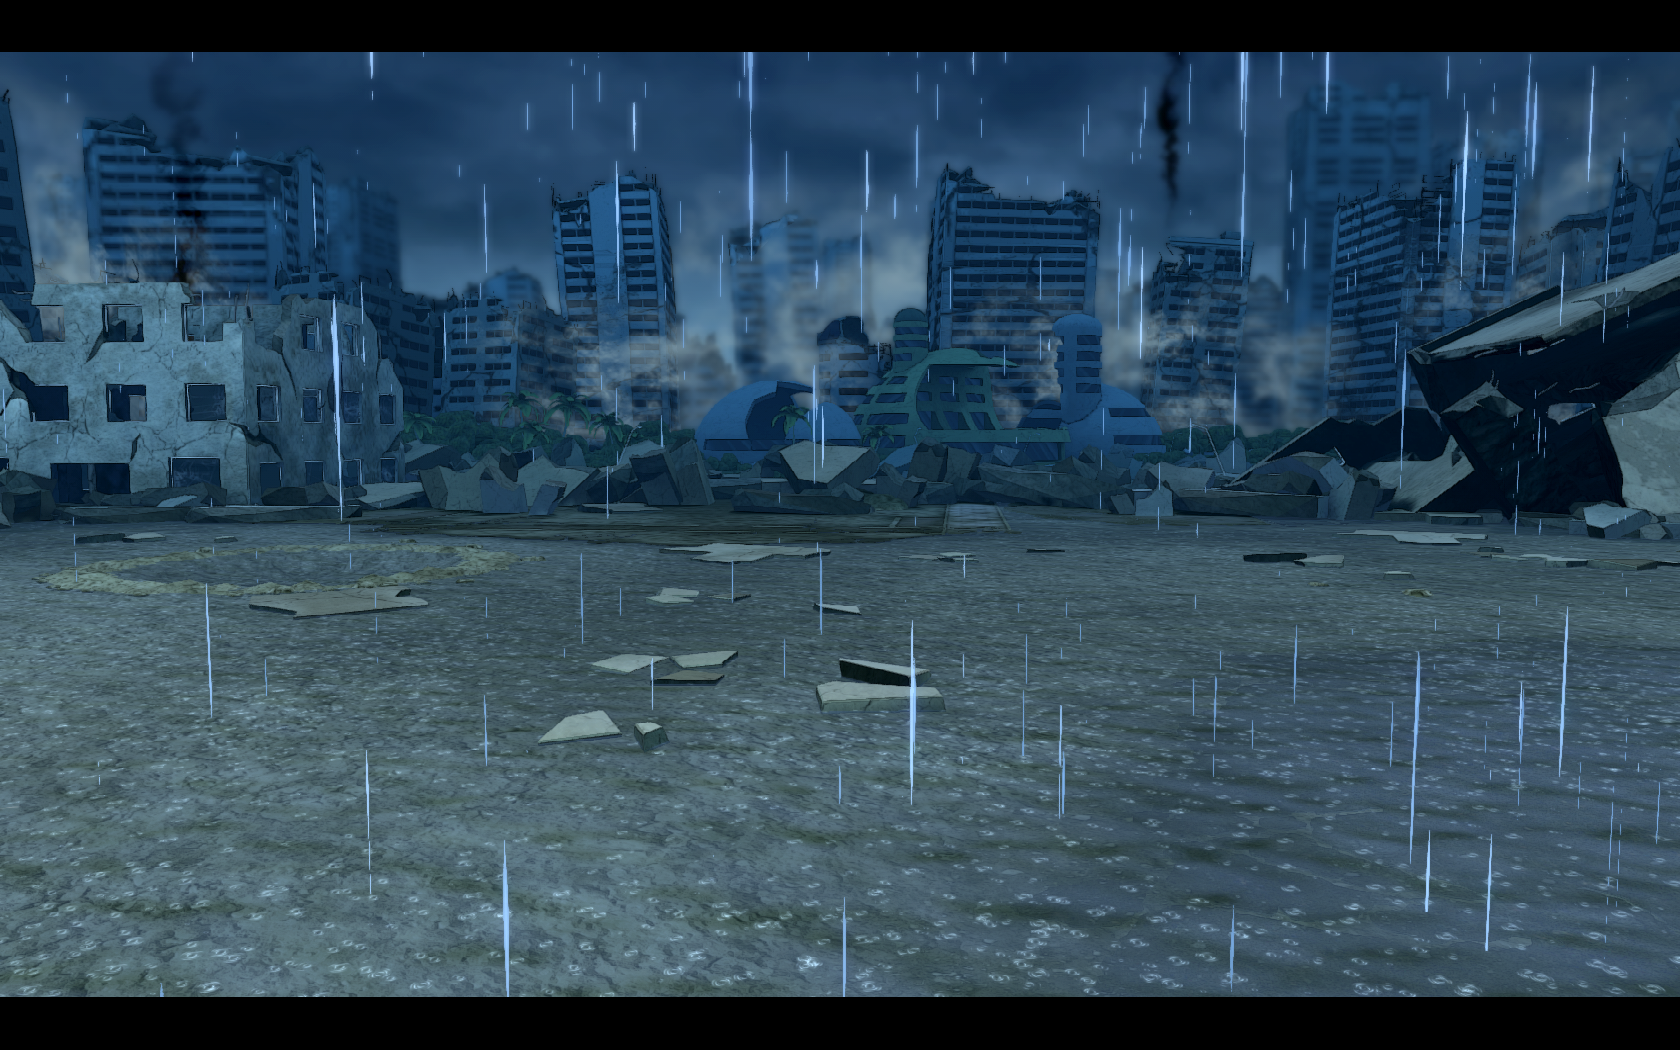 Rainy Future City Destroyed